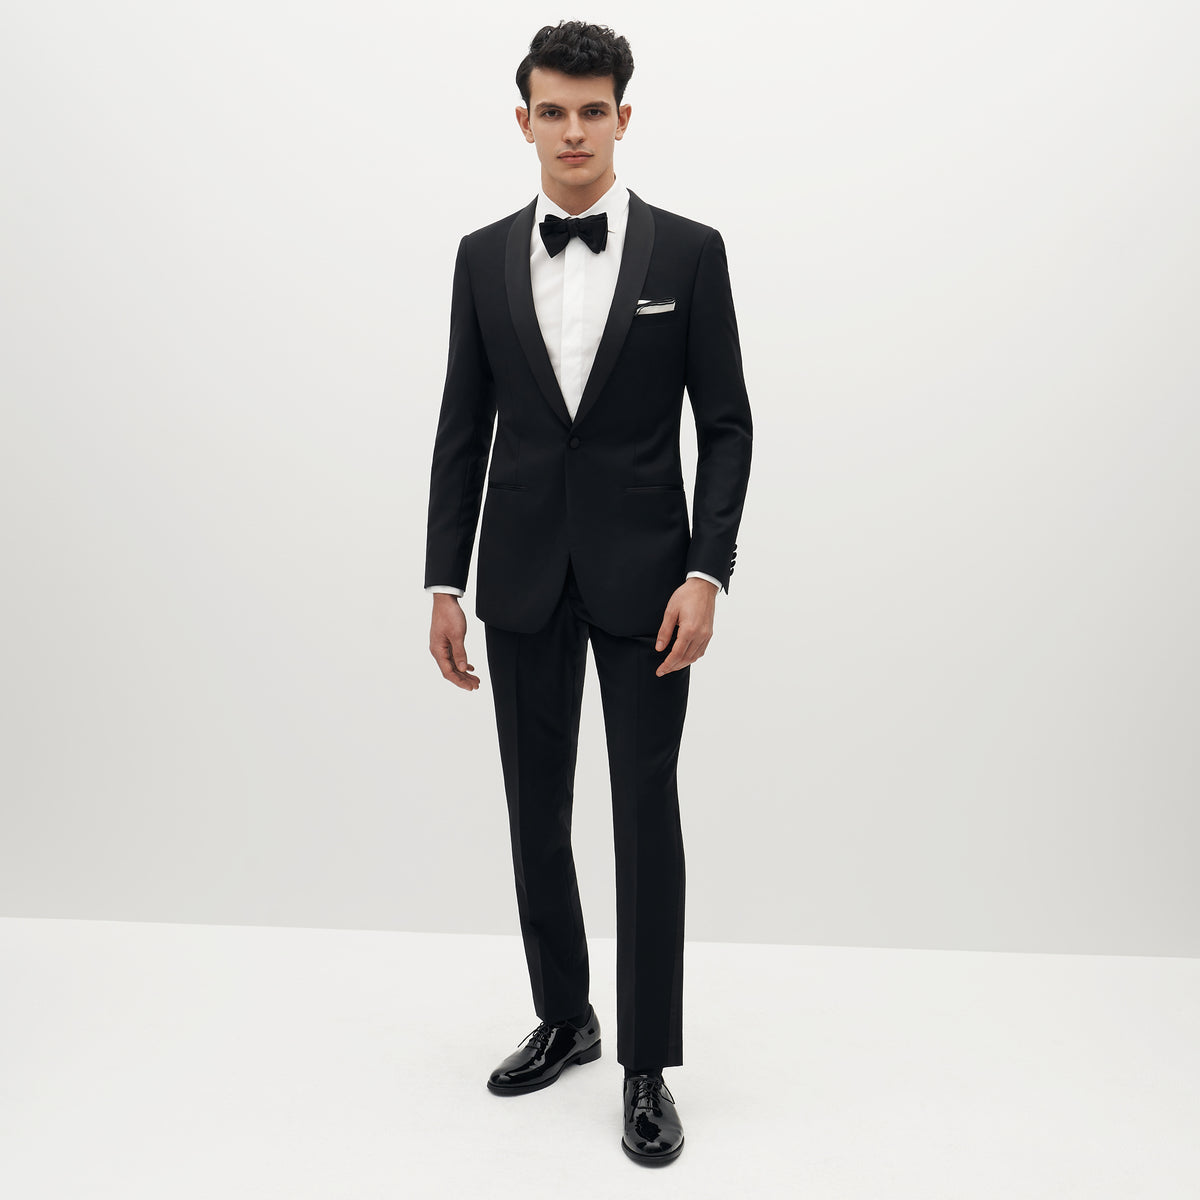 Shawl Lapel Tuxedo - The Groomsman Suit